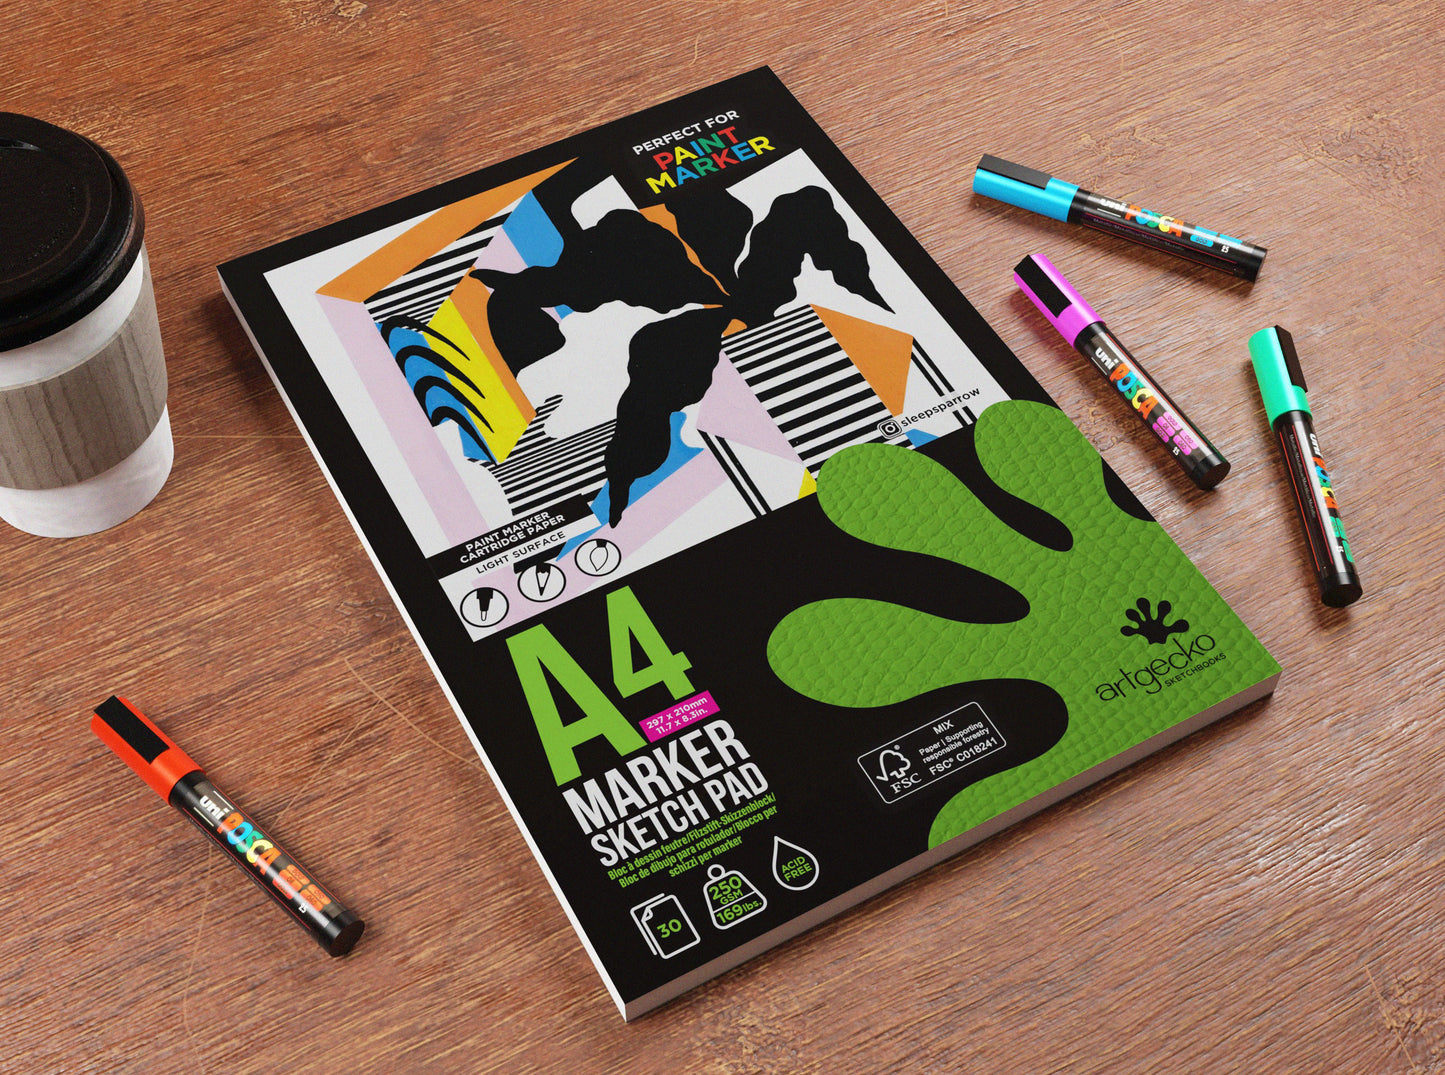 Artgecko FREESTYLE Paint Marker Paper Wirebound Sketchbooks – Artgecko  Sketch